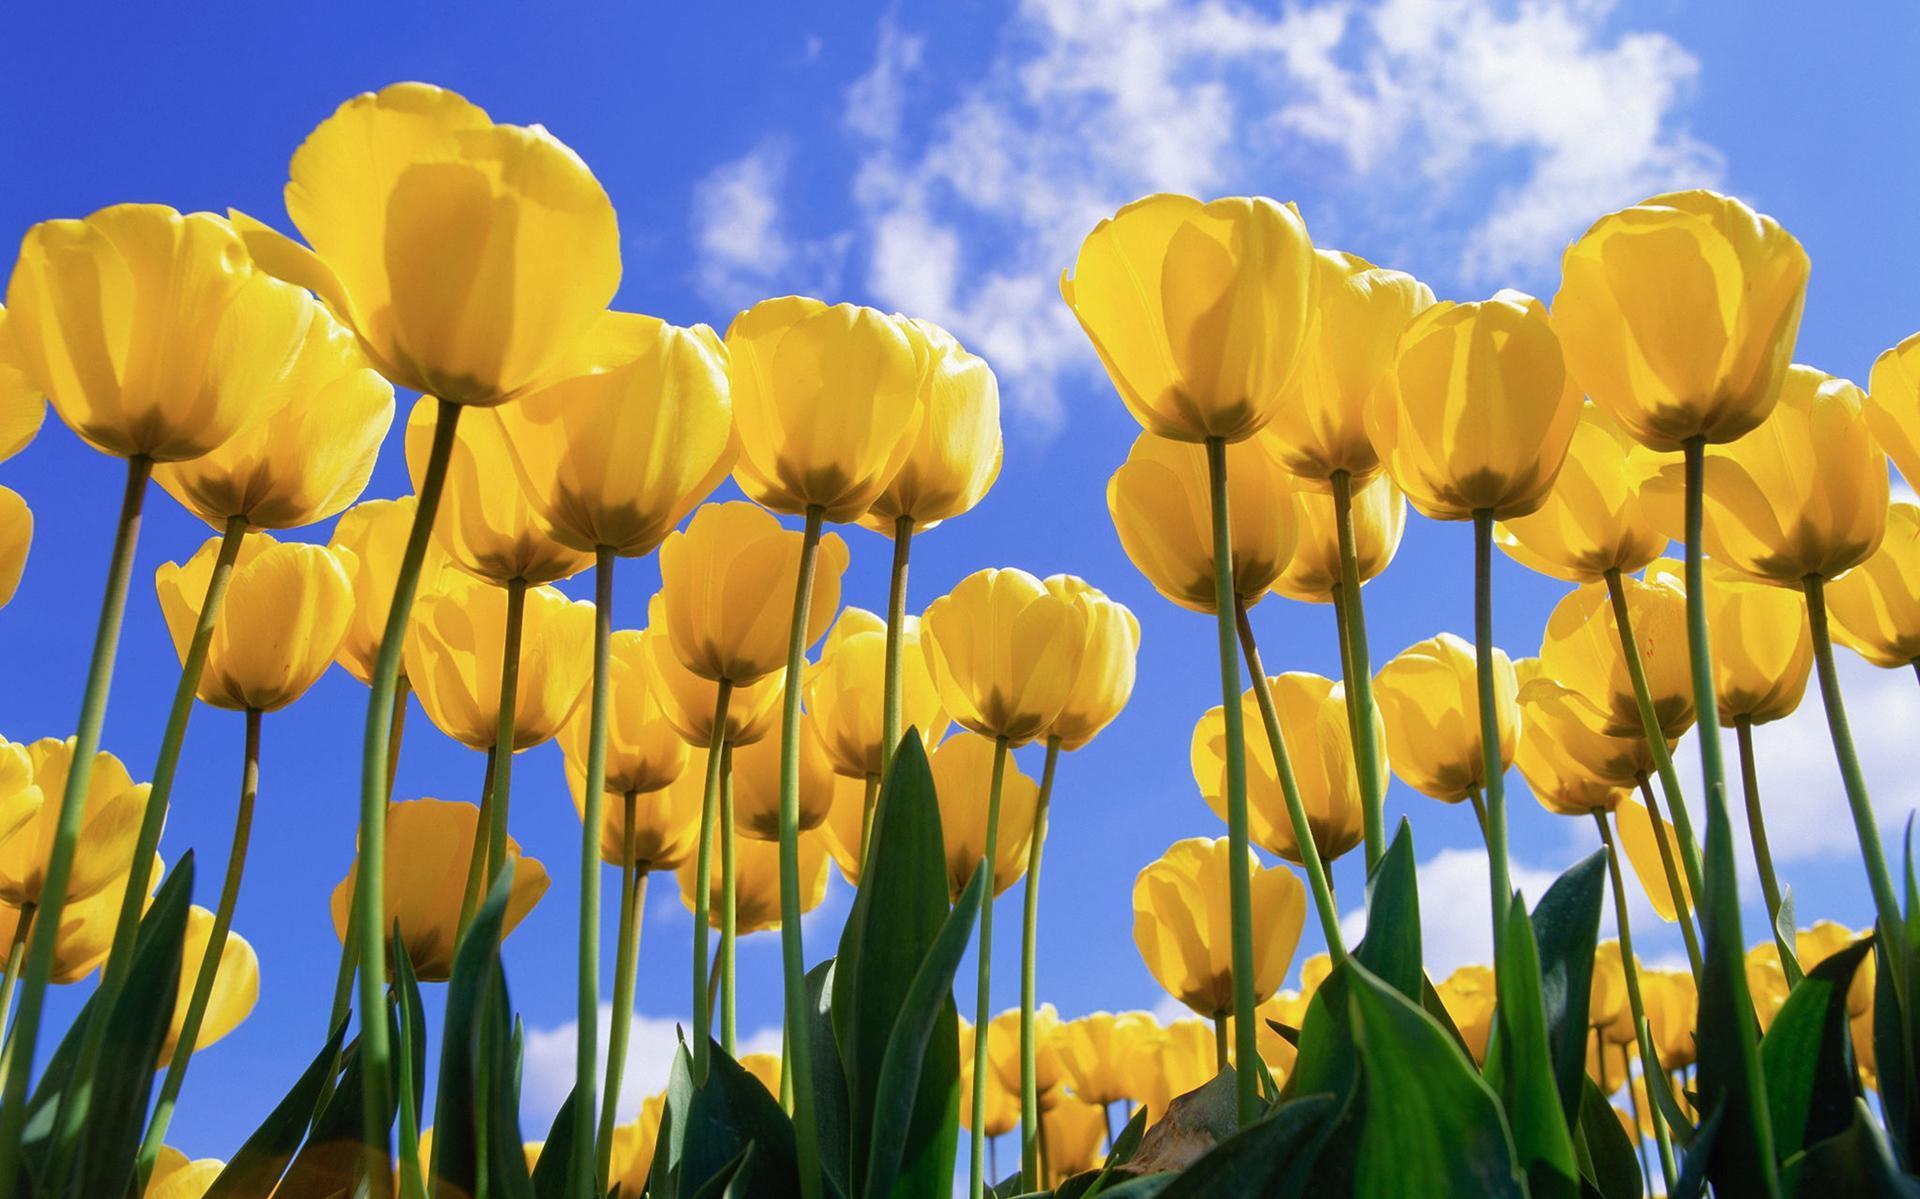 Tulips The Original Stock Image Of A Windows Xp Wallpaper